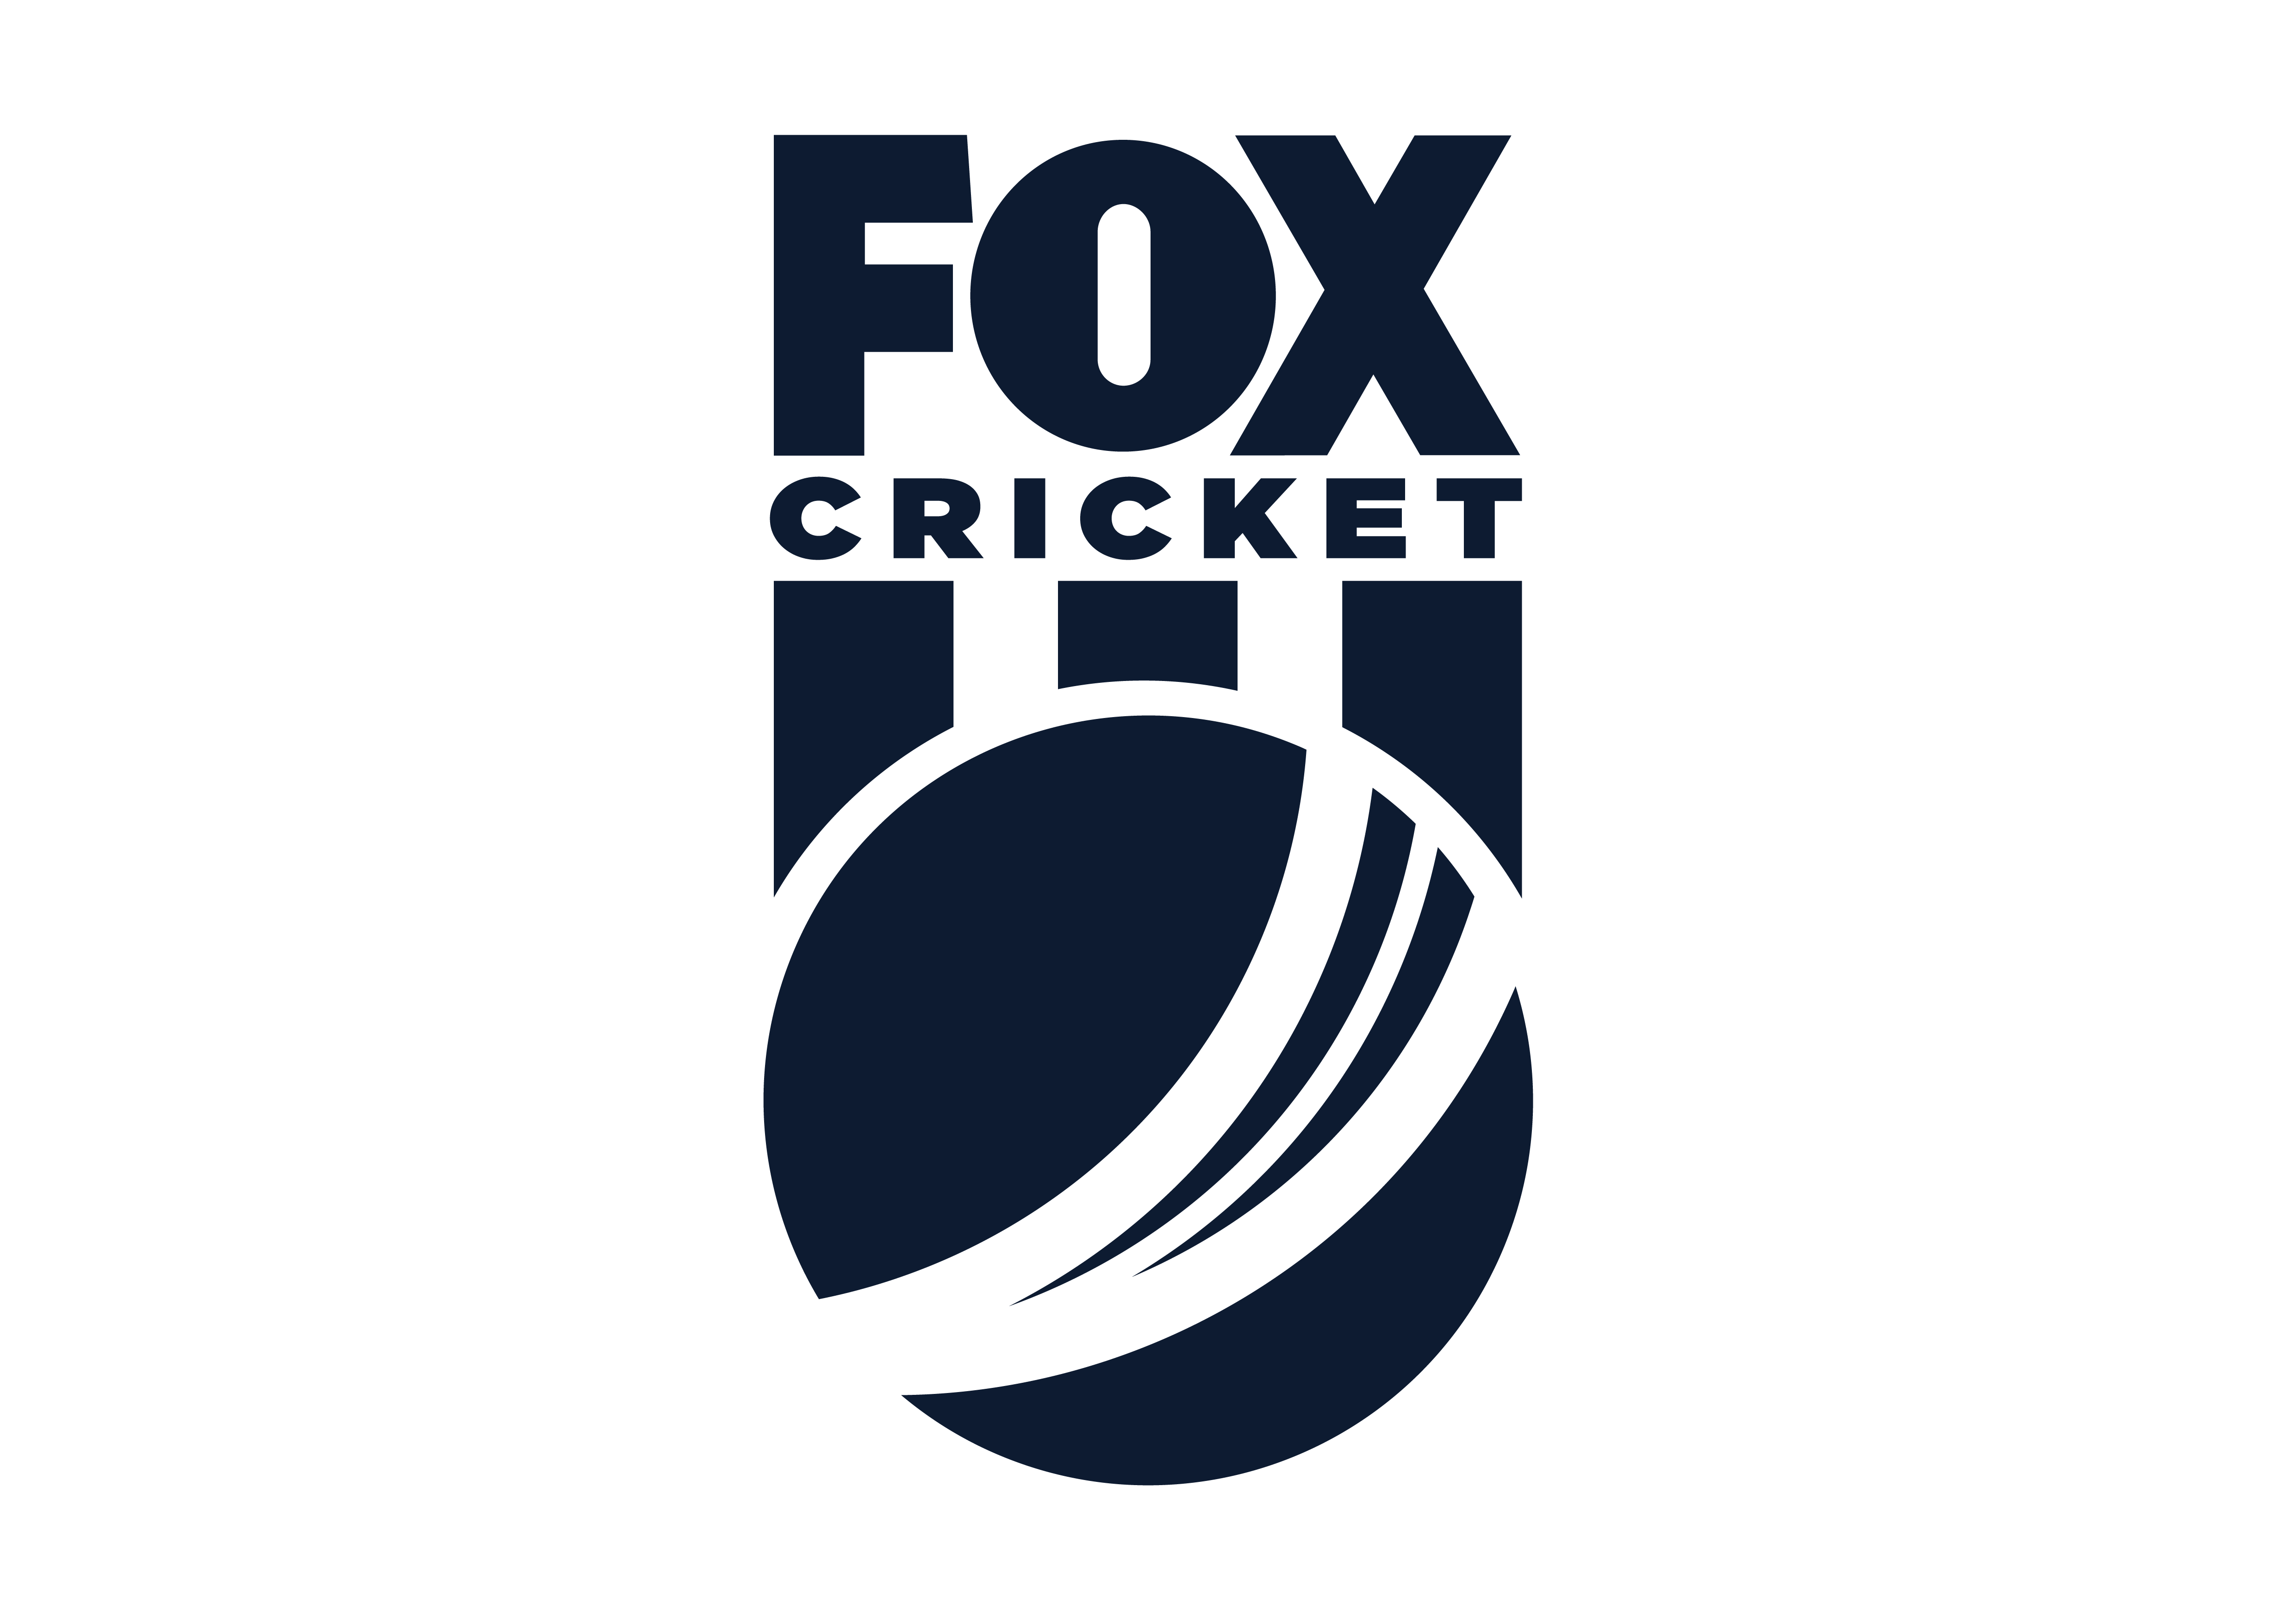 Fox cricket logo